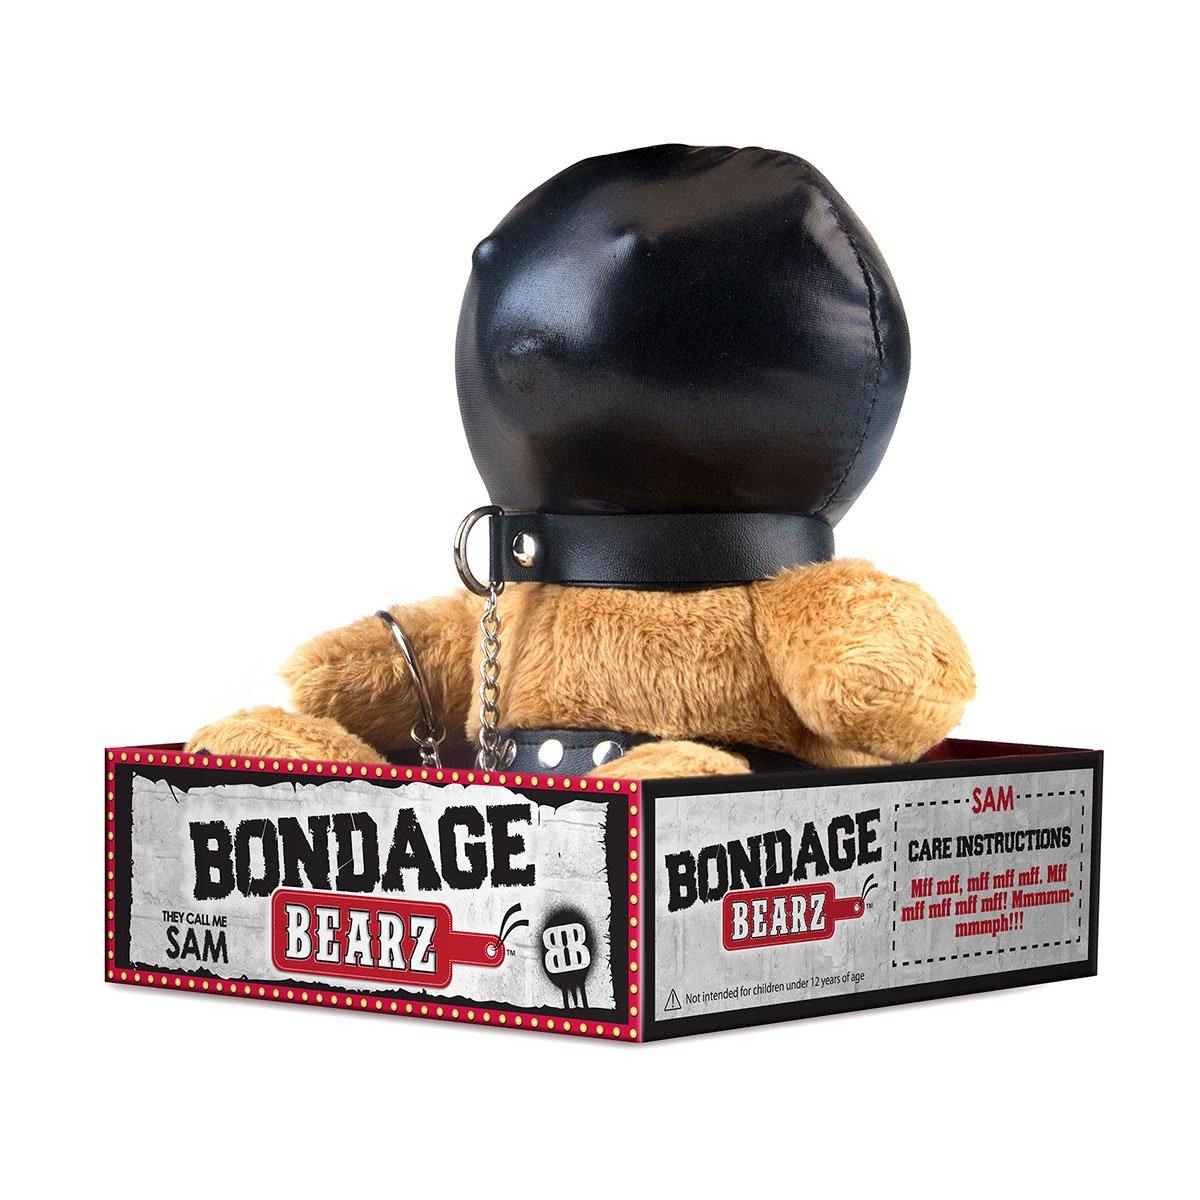 Bondage Bearz Gimpy Glen Bear - Buy At Luxury Toy X - Free 3-Day Shipping